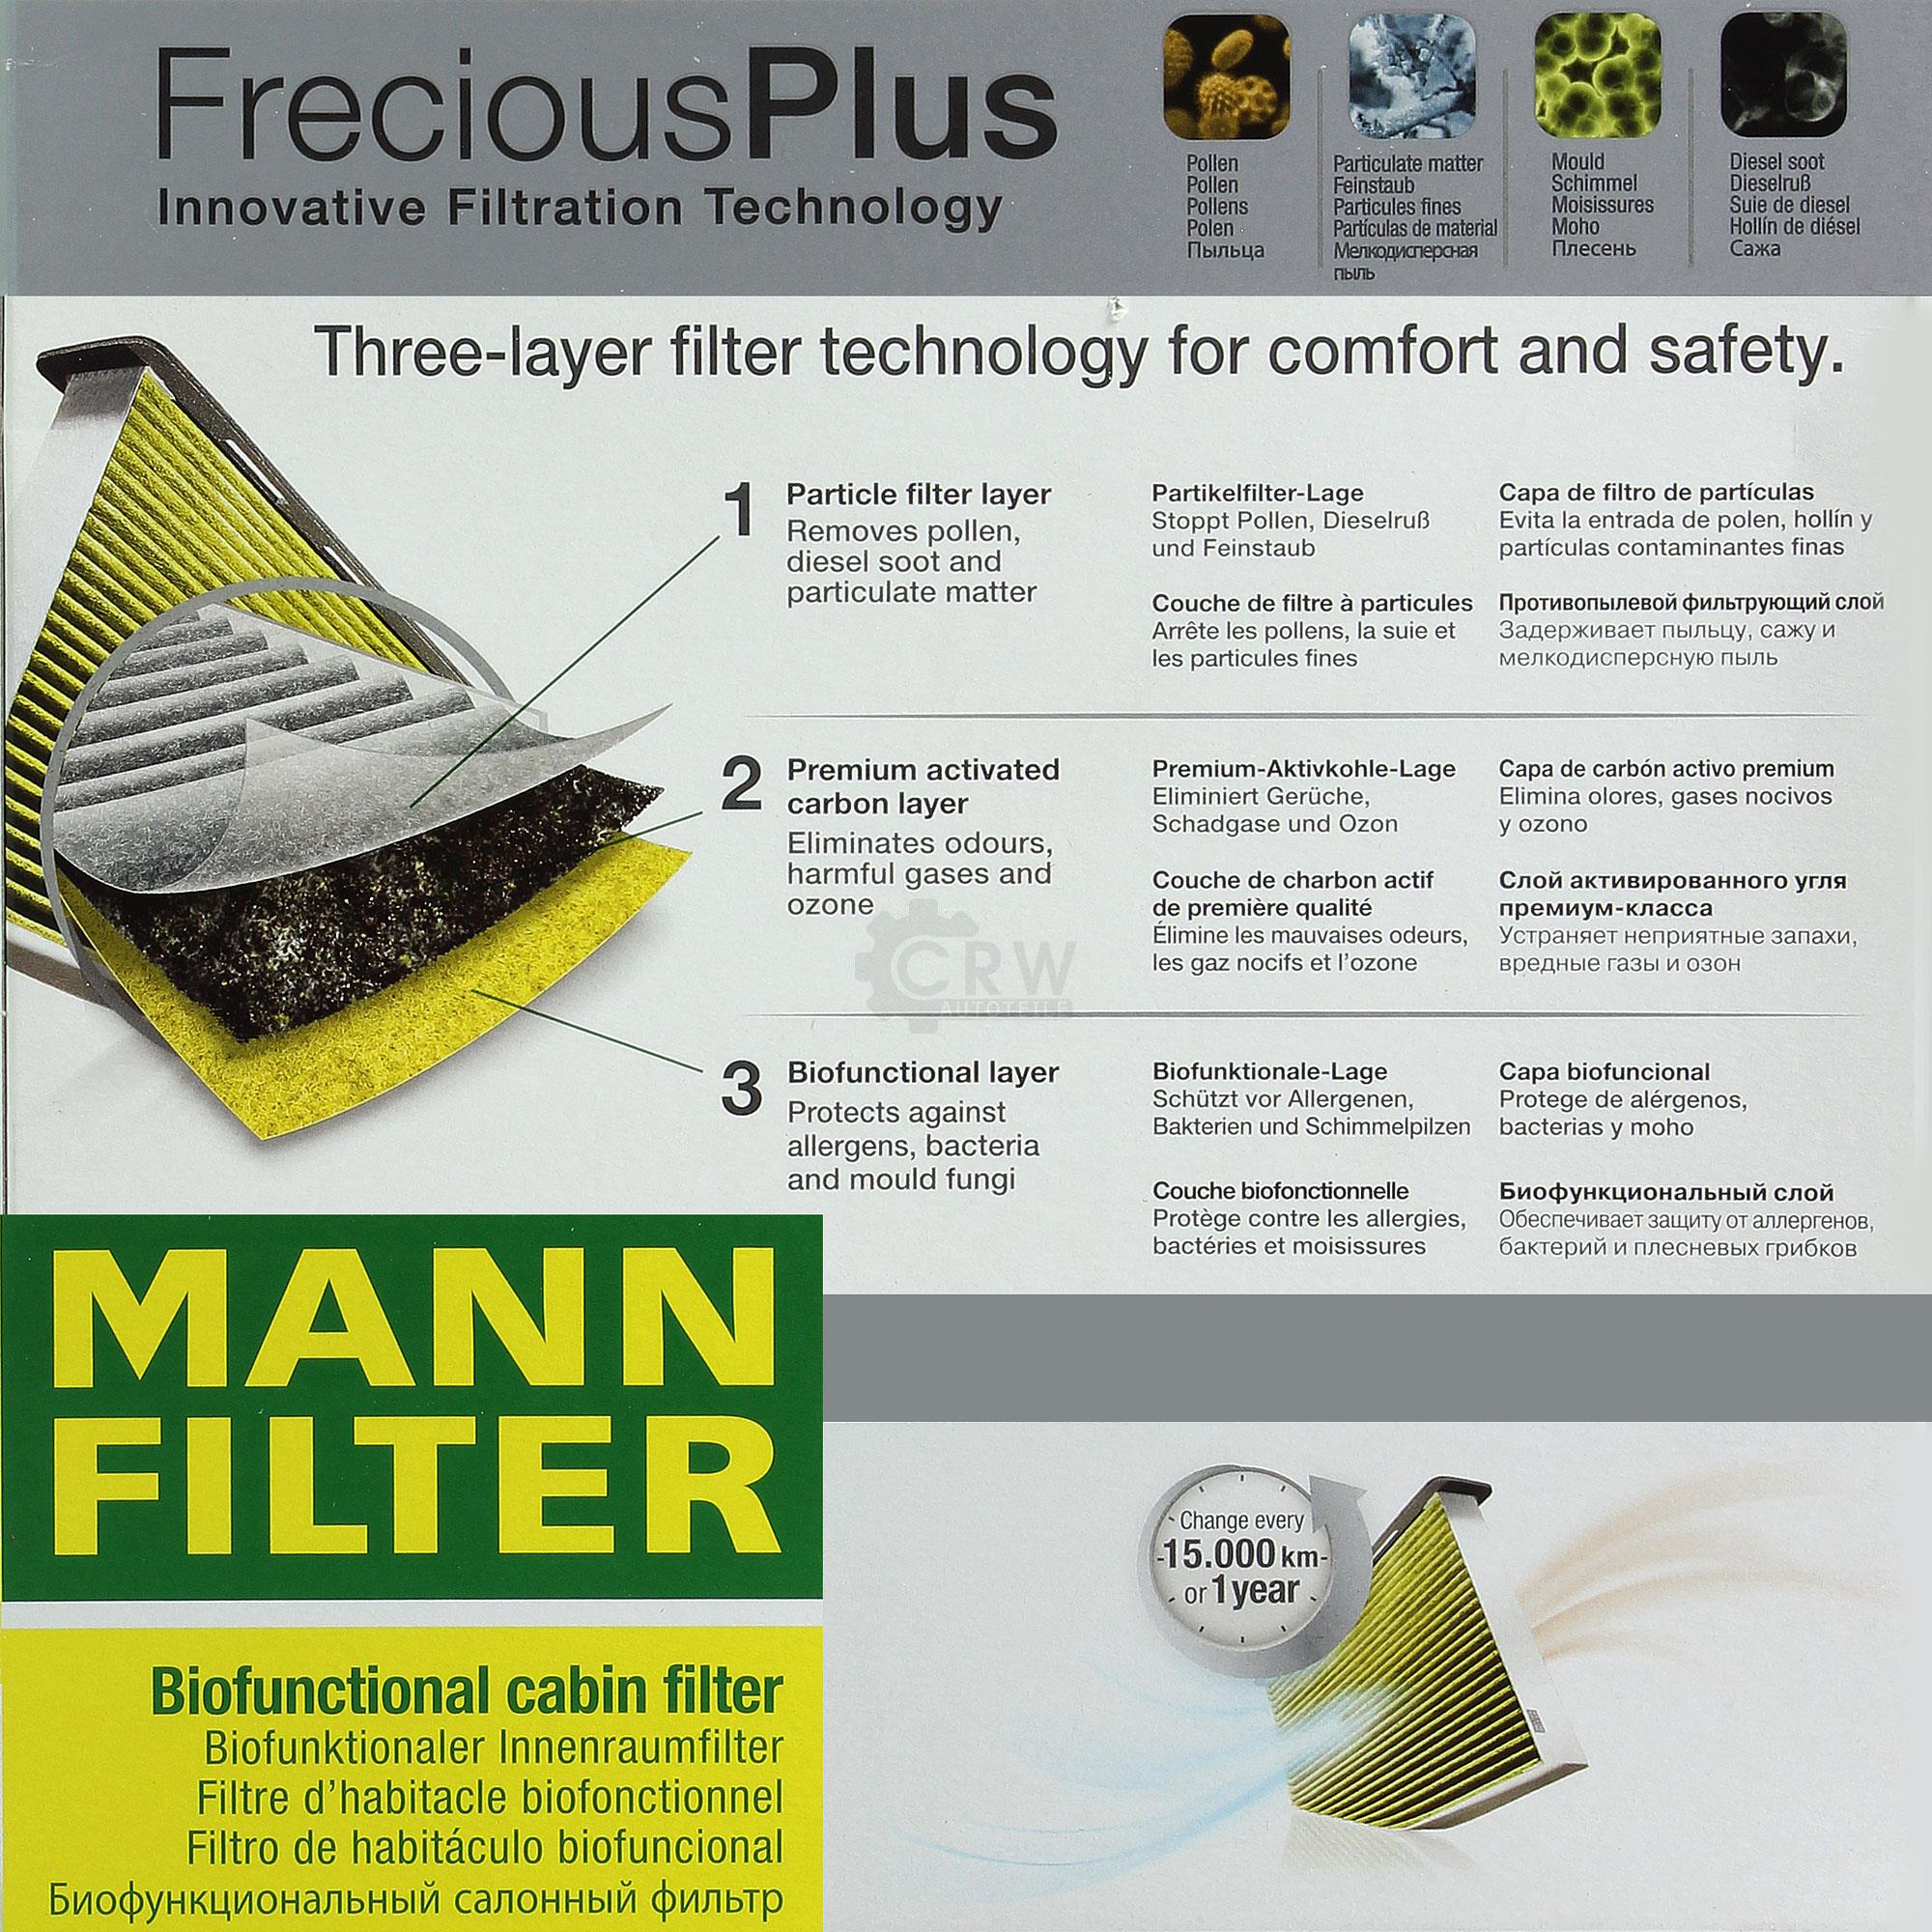 MANN-Filter Innenraumfilter Biofunctional für Allergiker FP 2722-2